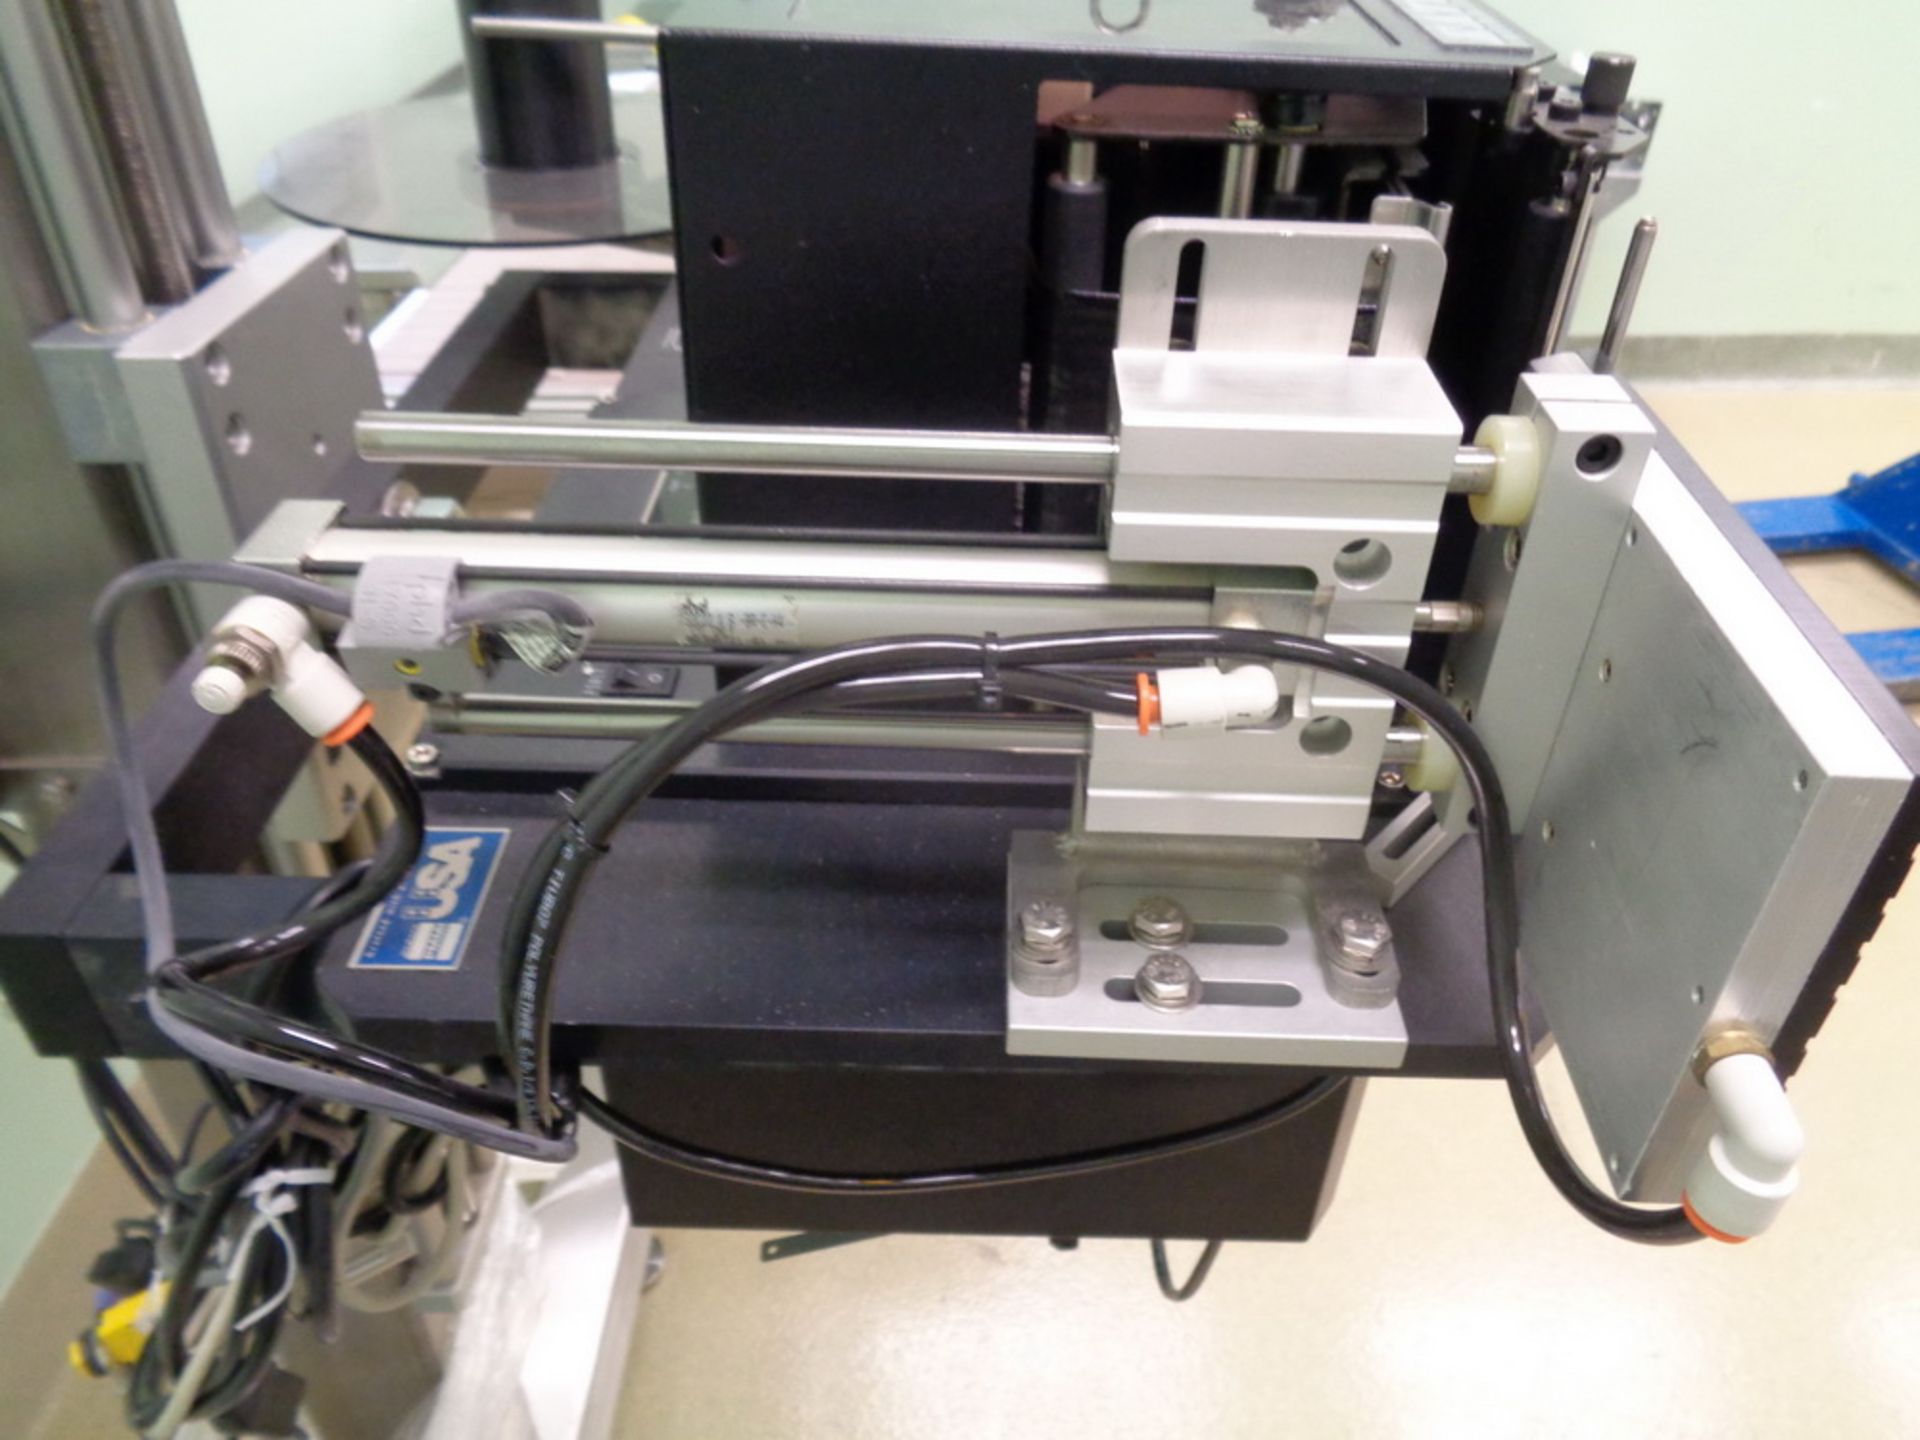 Quadrel Print and Apply Pressure Sensitive Carton Labeler, Model Q31-LS8490, S/N 57957-01 - Image 5 of 10